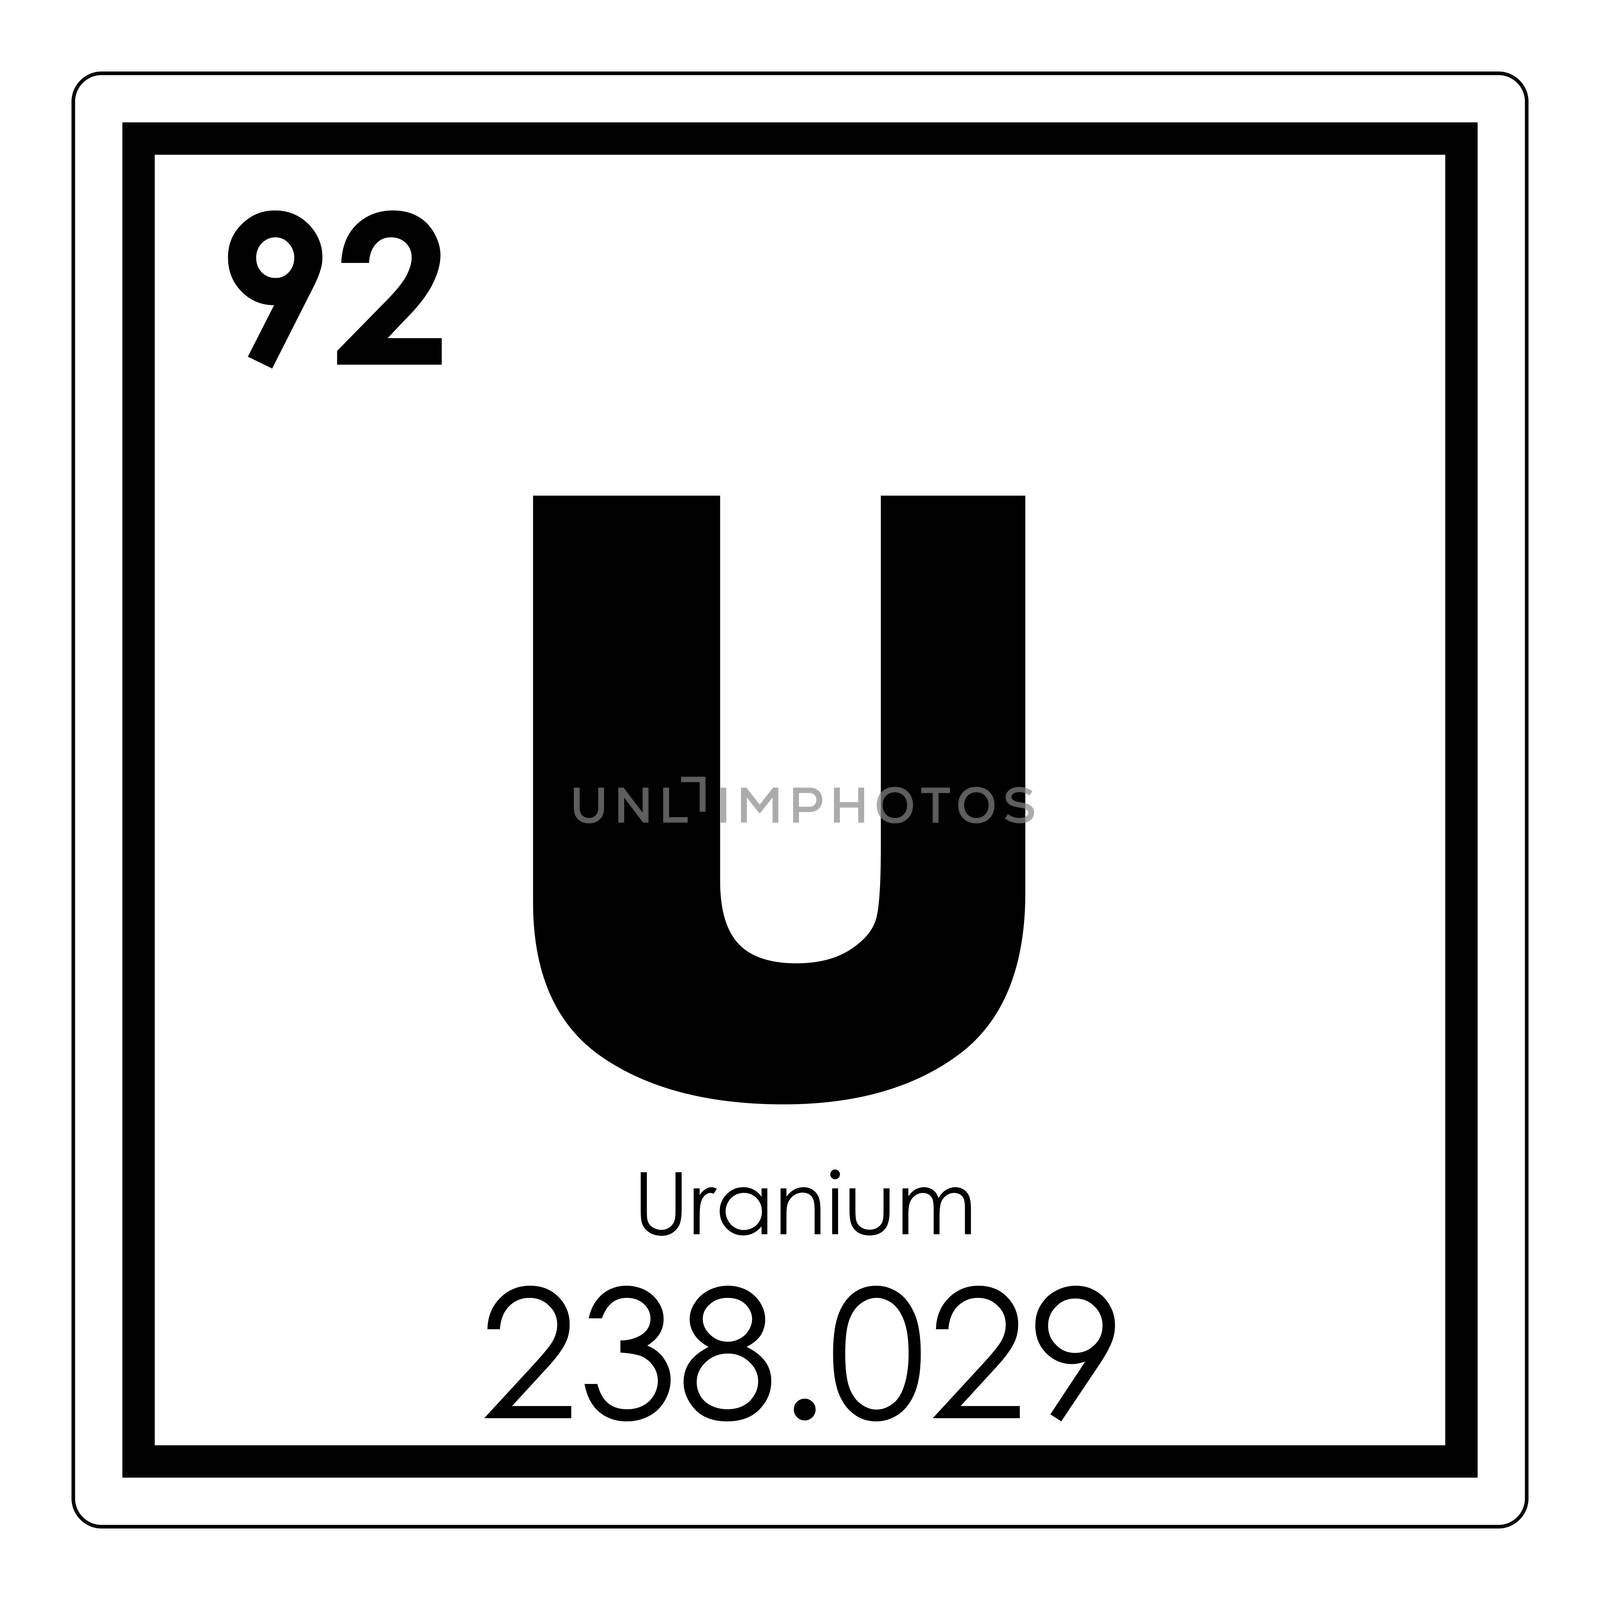 Uranium chemical element by tony4urban